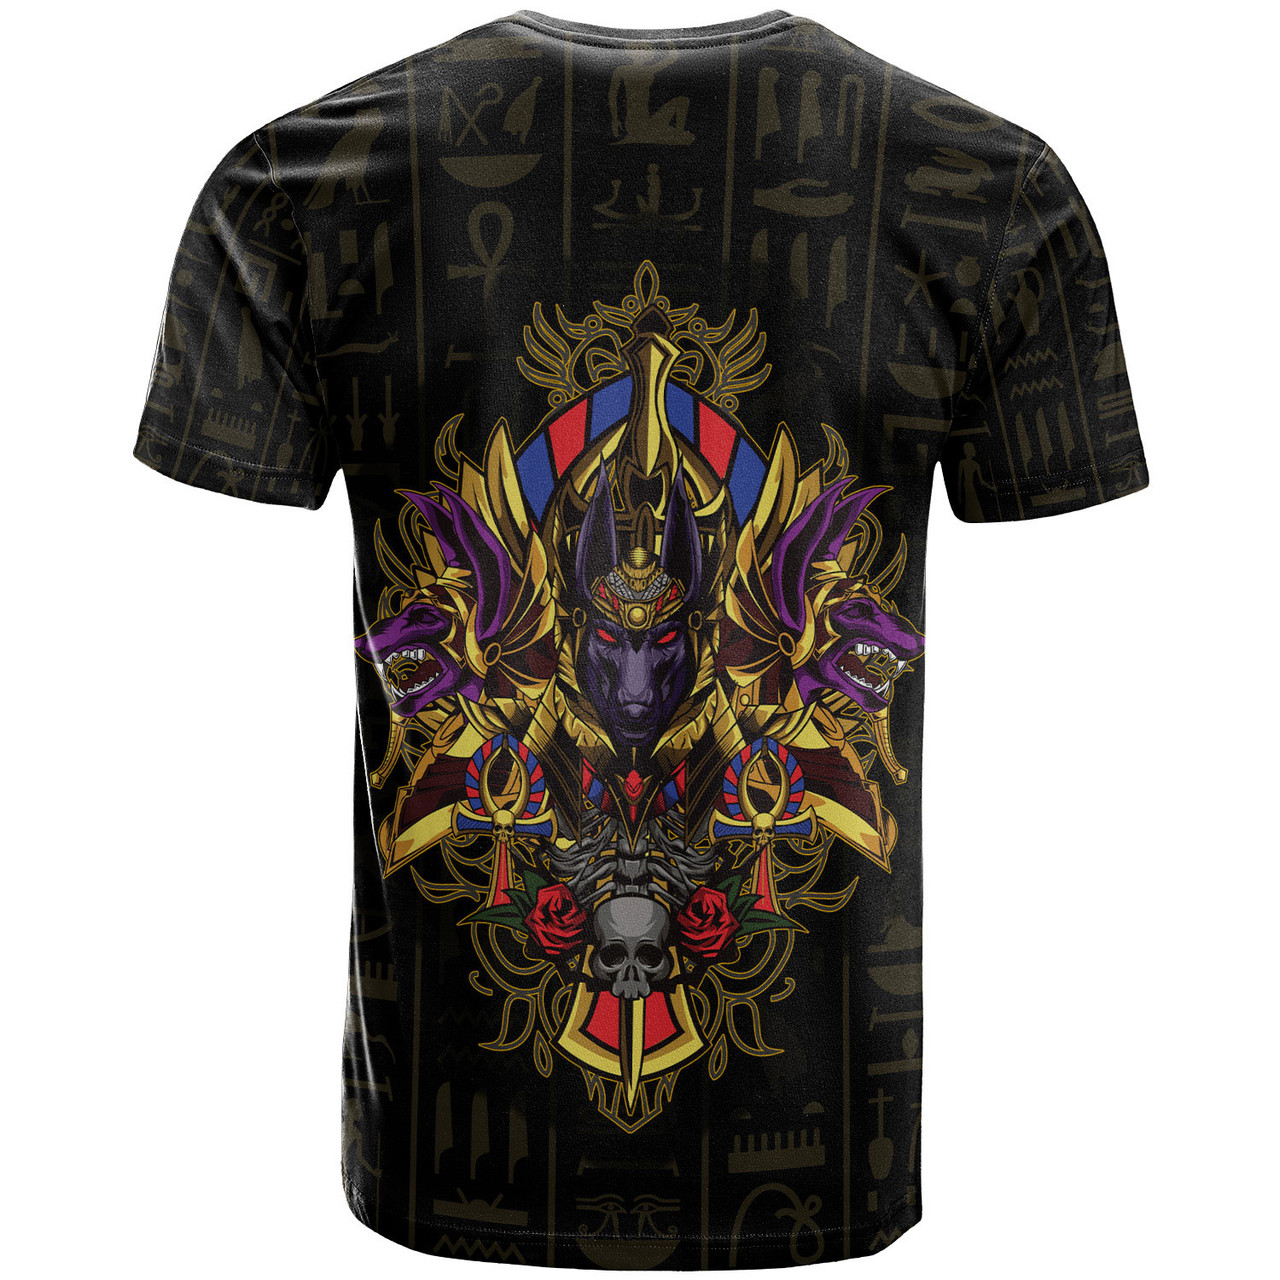 Egyptian T-Shirt - Egyptian God Anubis T-Shirt Desert Fashion 2